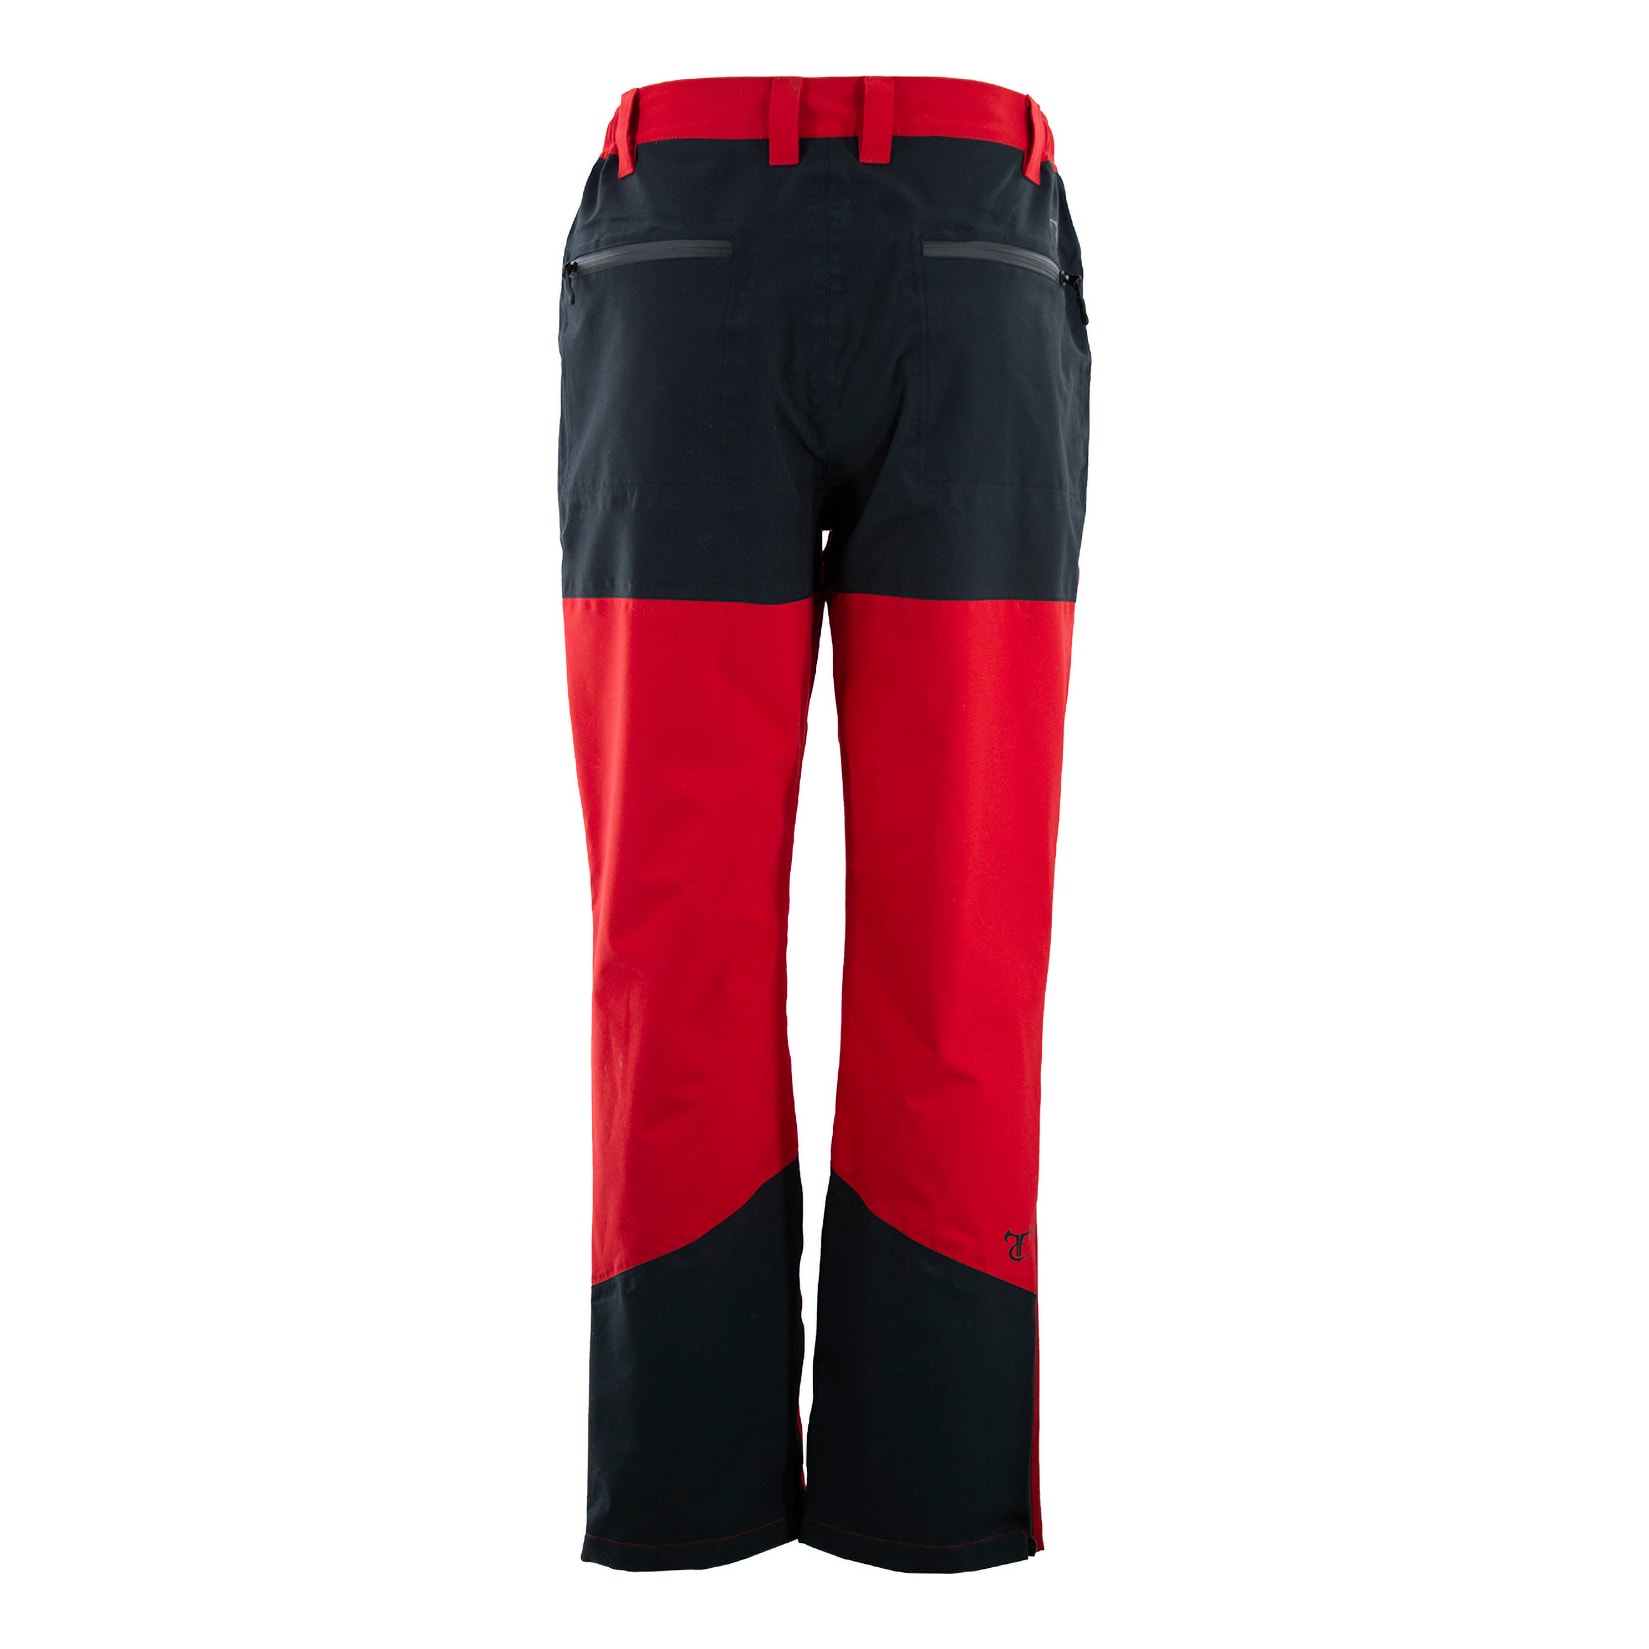 TrueTimber® Men’s Longtail Pants - Red Hot/Black - back